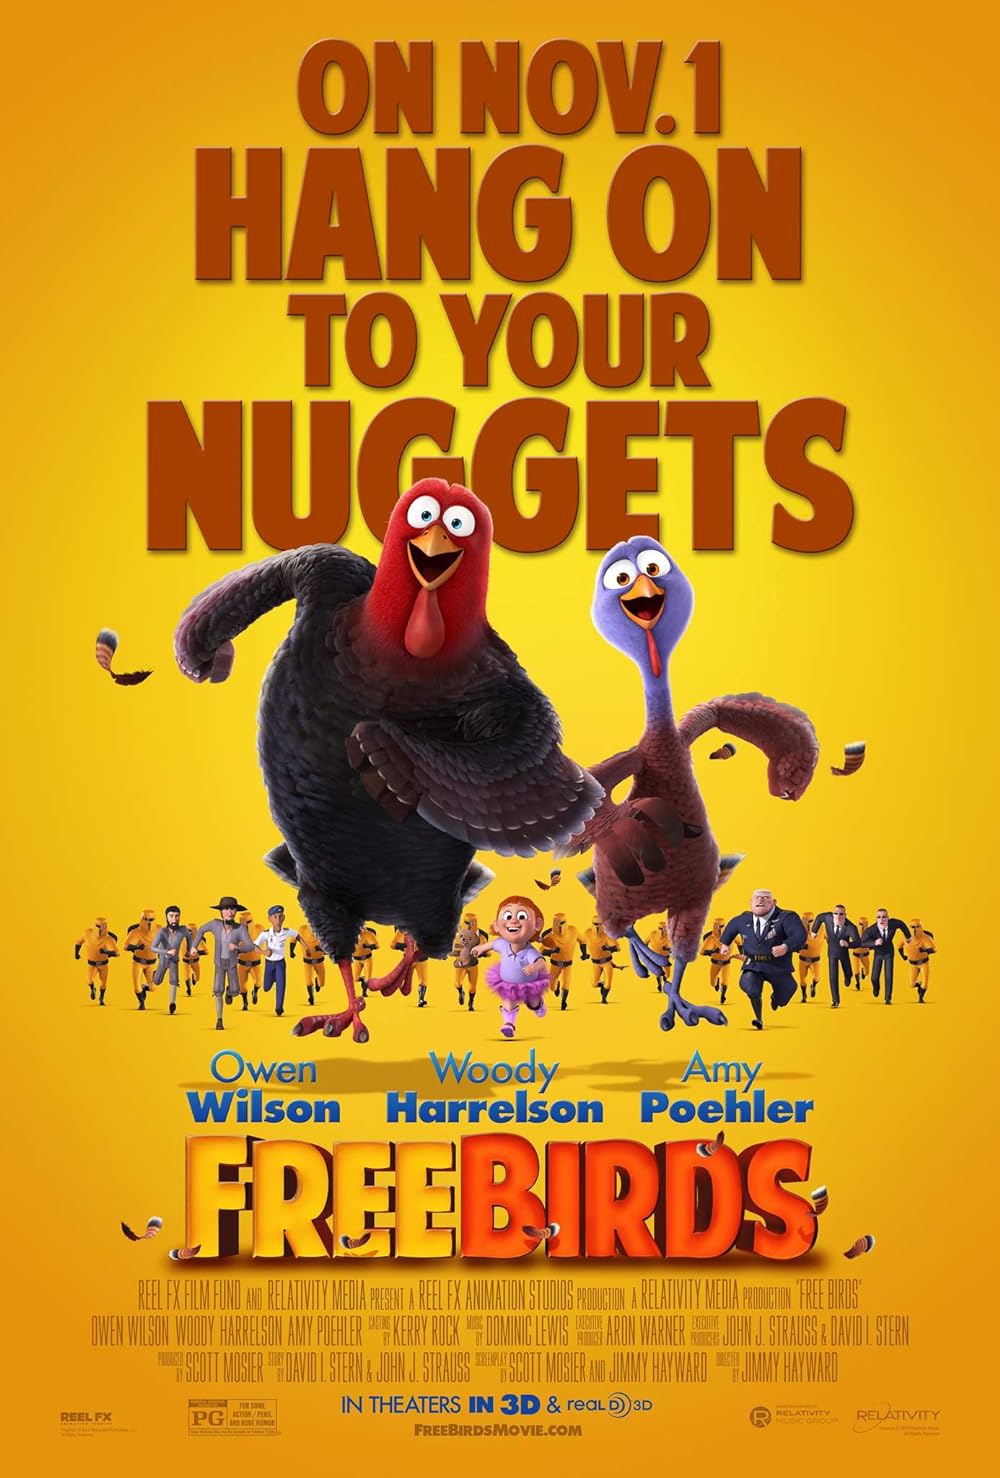 FULL MOVIE: Free Birds (2013)